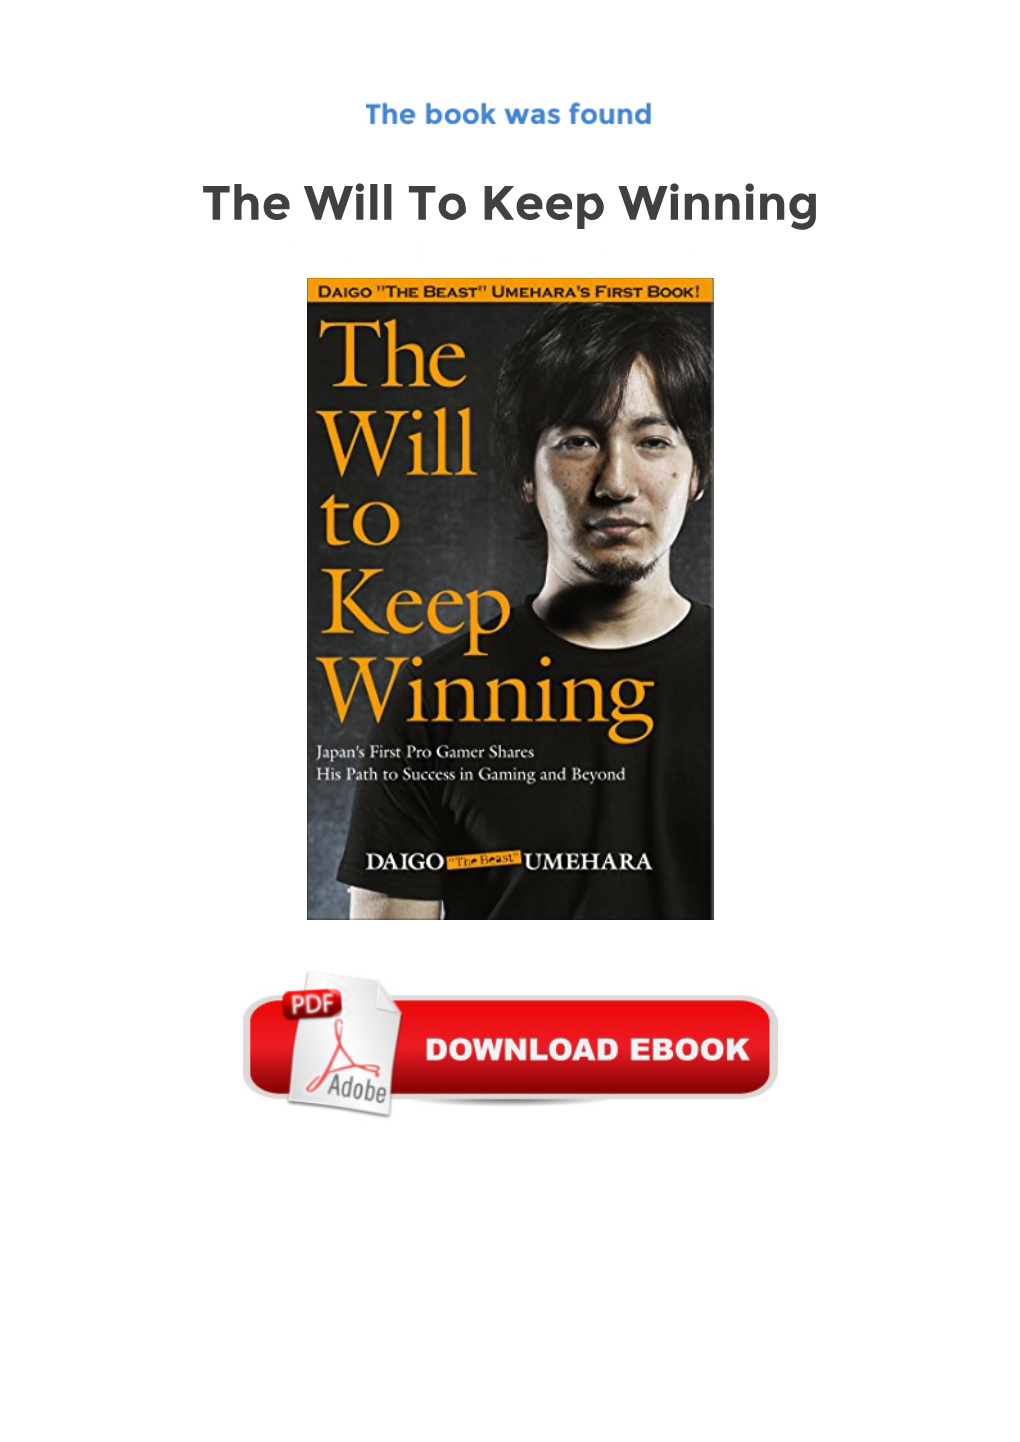 The Will to Keep Winning Download Free (EPUB, PDF)